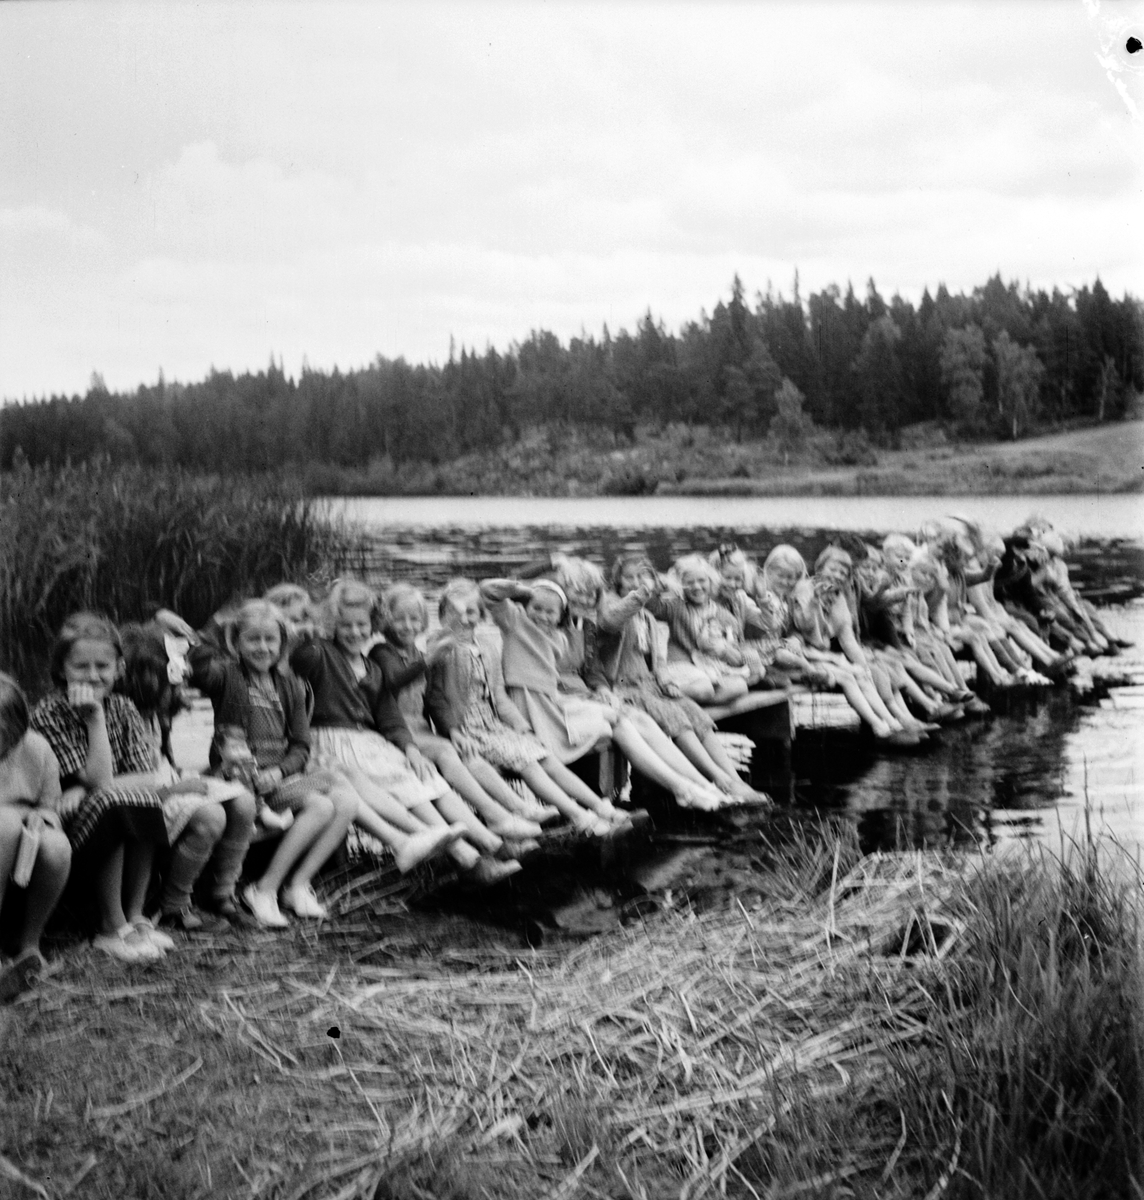 Lekande barn, Edakolonin, Uppland 1950